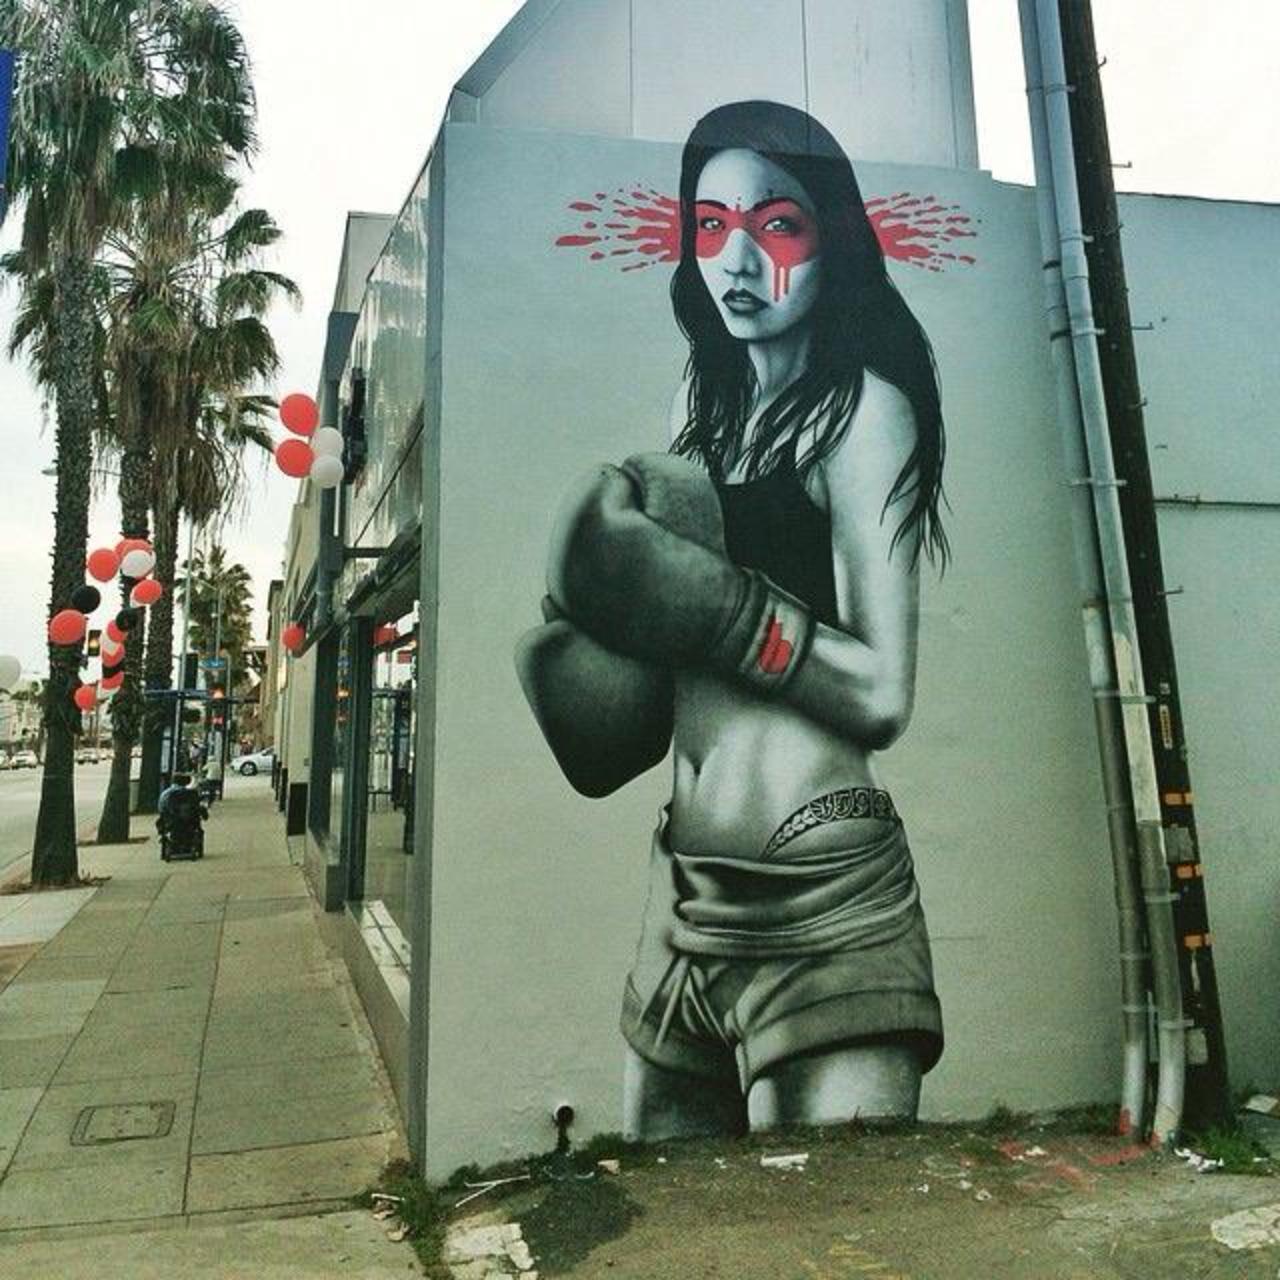 New Street Art by the artist FinDac in Santa Monica, CA 

#art #arte #graffiti #streetart http://t.co/xhZsTH4plY